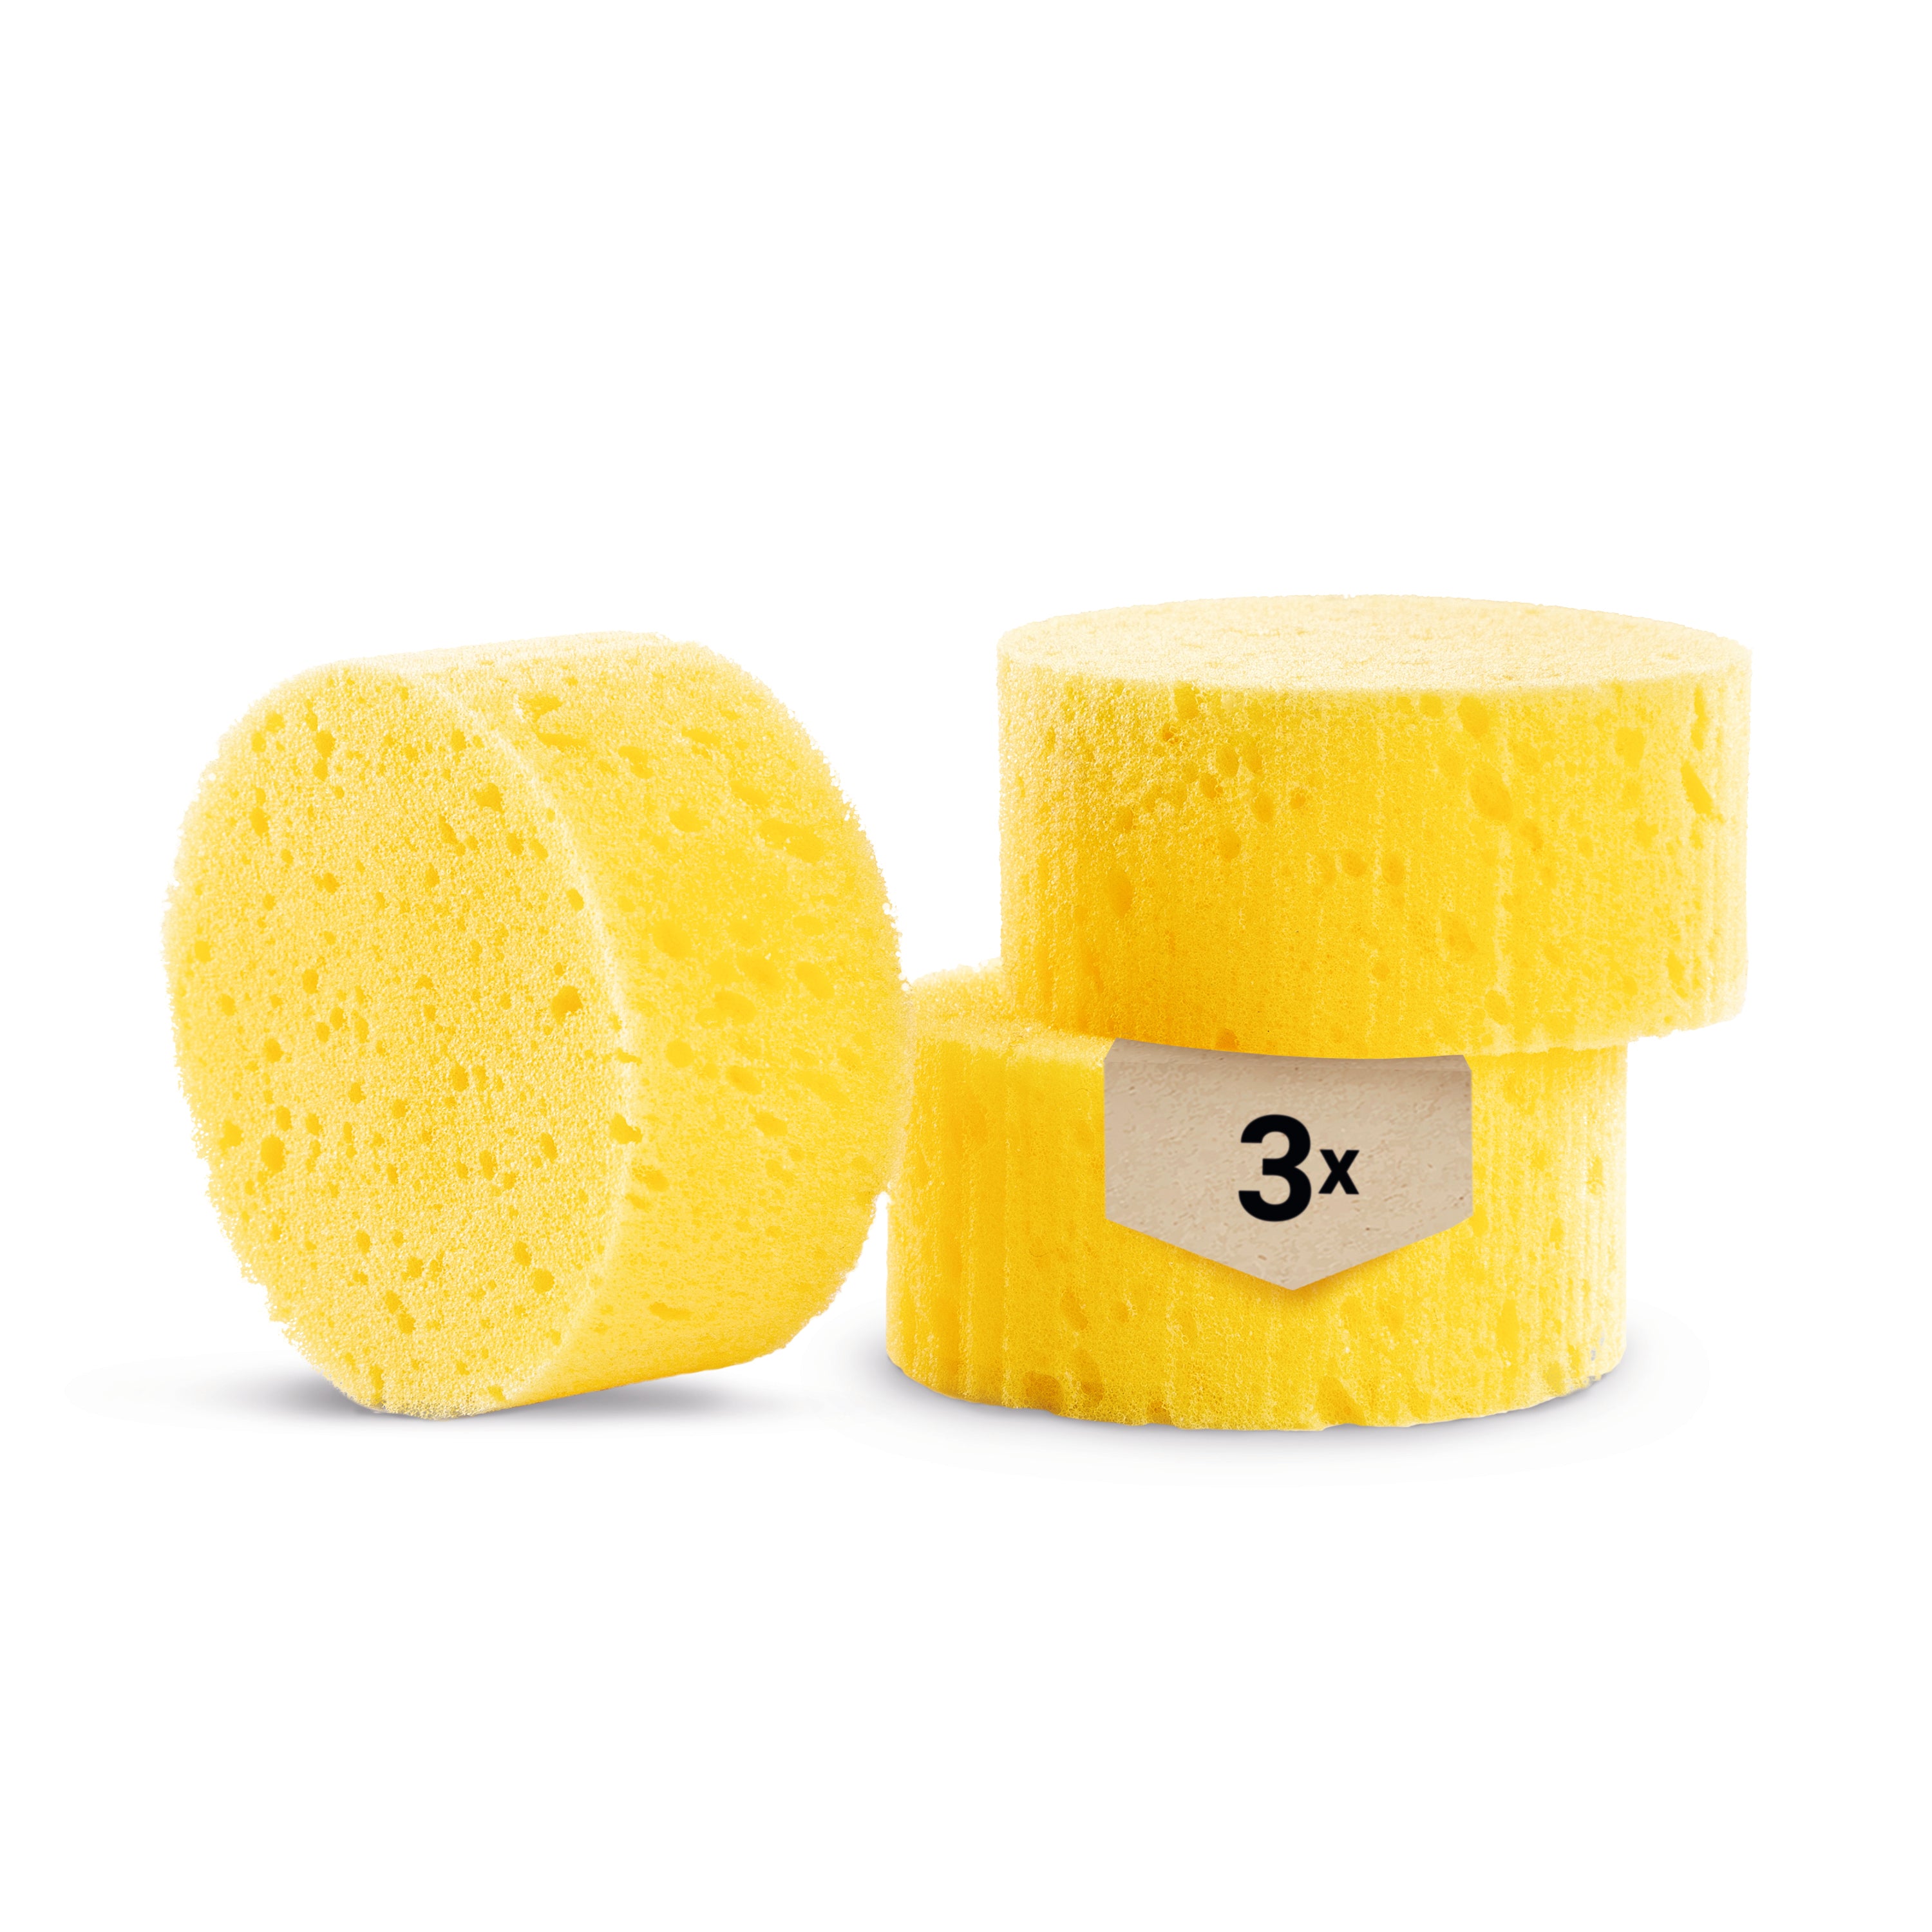 Foam polishing sponges for wood &amp; leather care, coarse &amp; fine sponges washable 